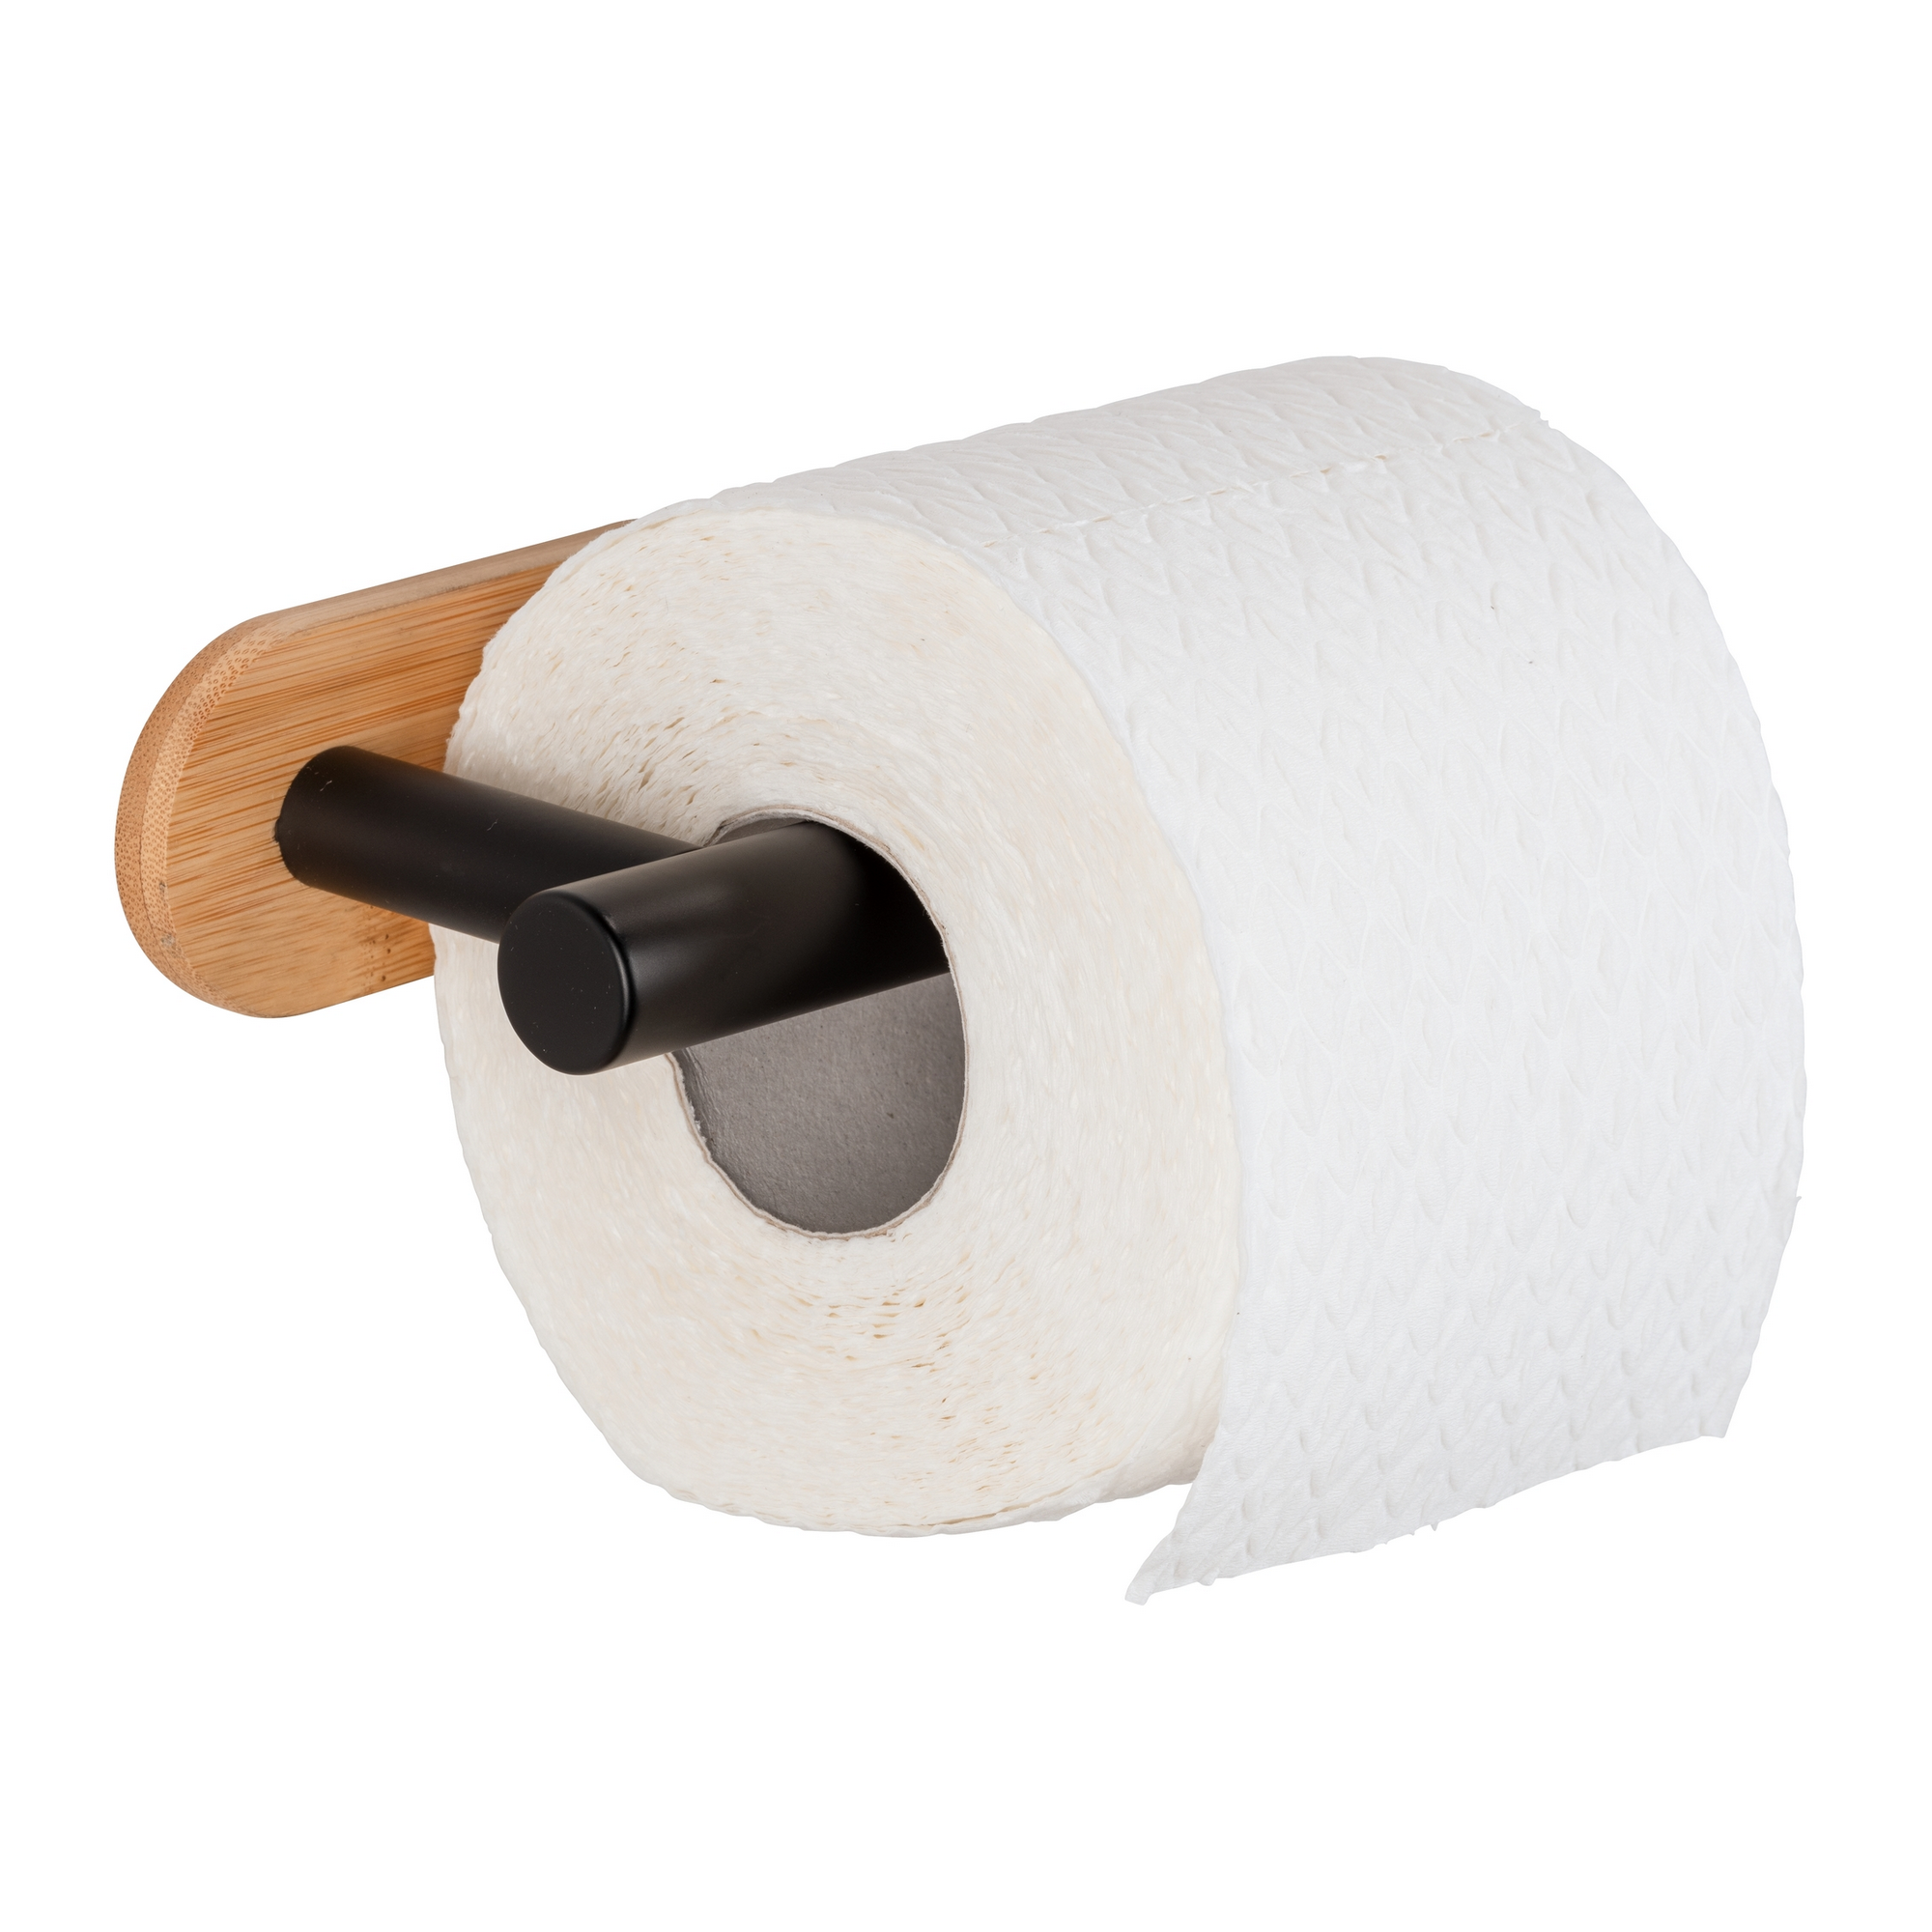 Toilettenpapierhalter 'Turbo-Loc Orea Bamboo' schwarz/bambus + product picture